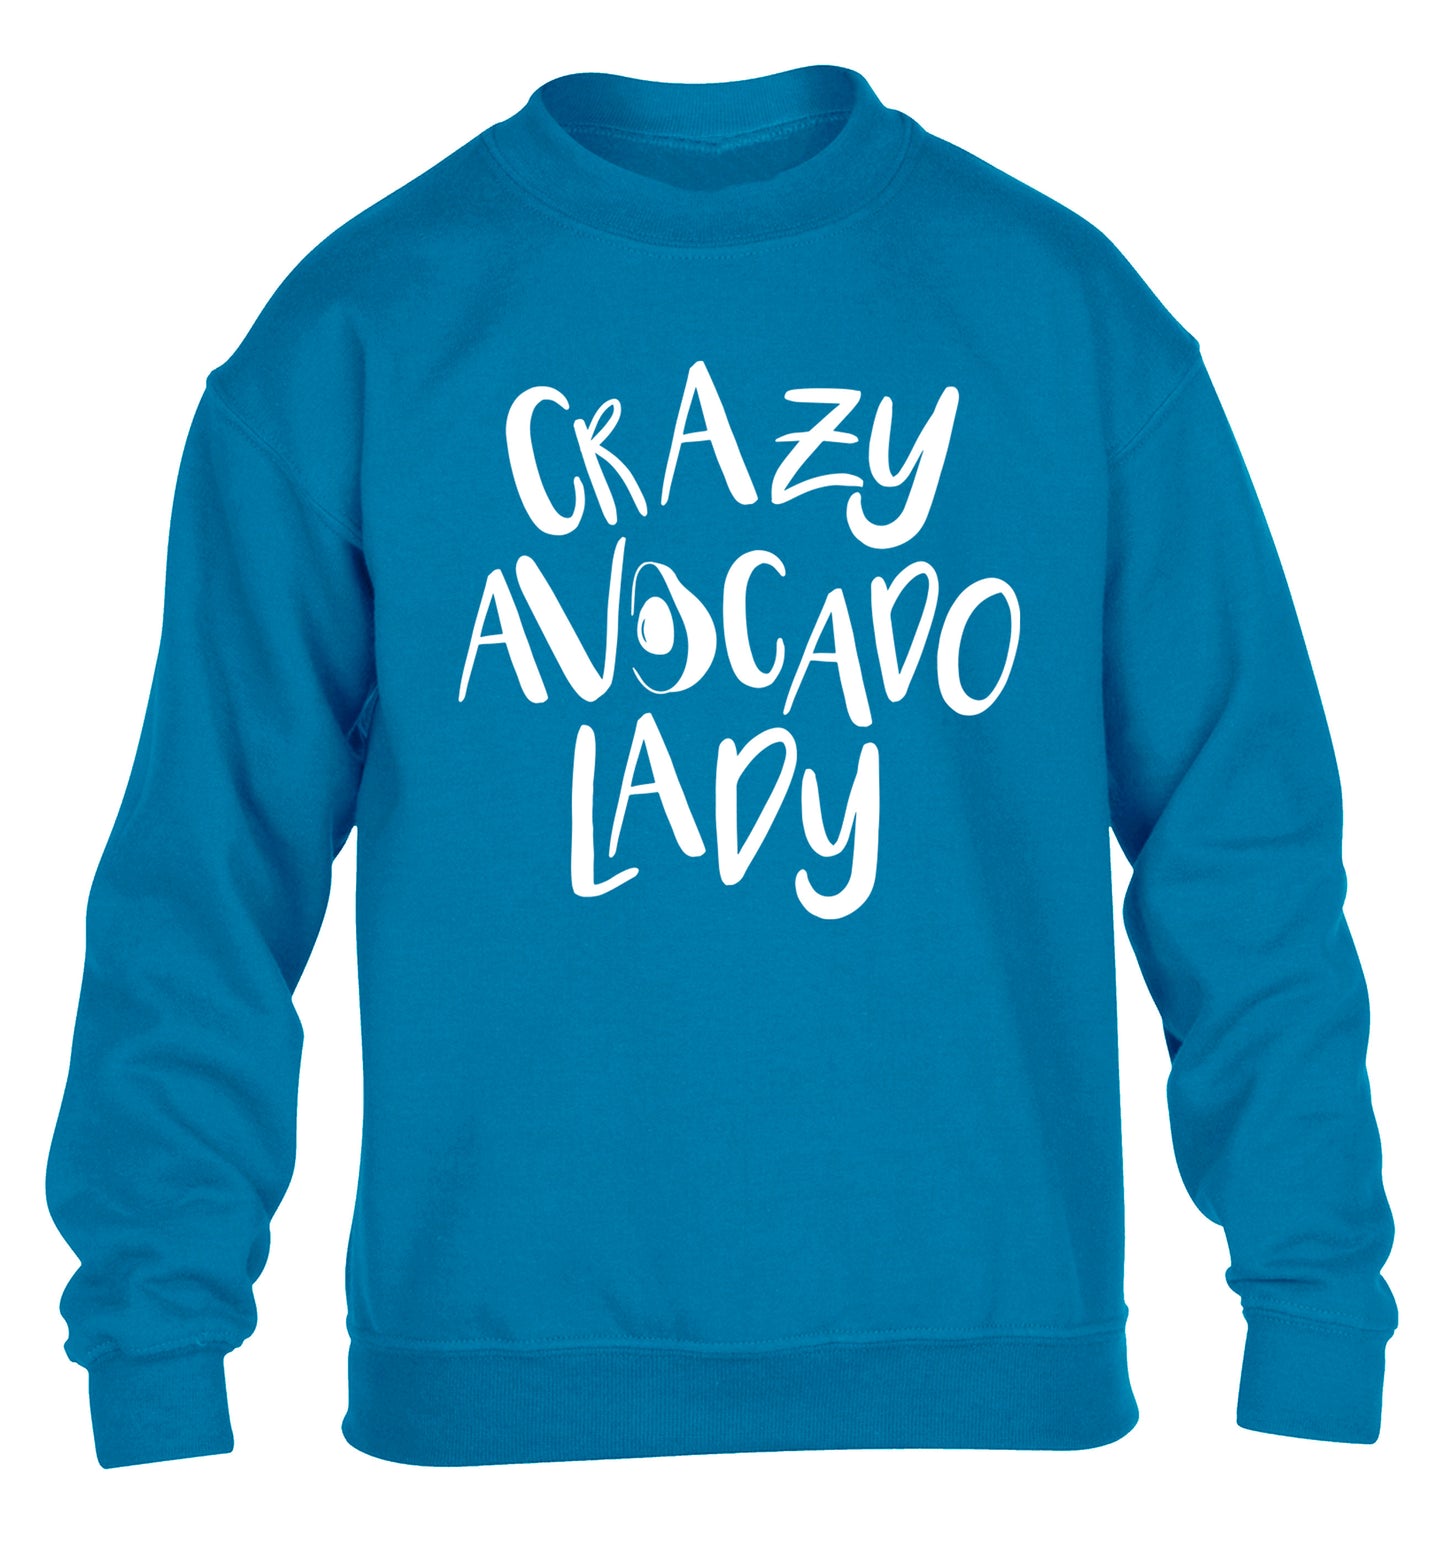 Crazy avocado lady children's blue sweater 12-14 Years